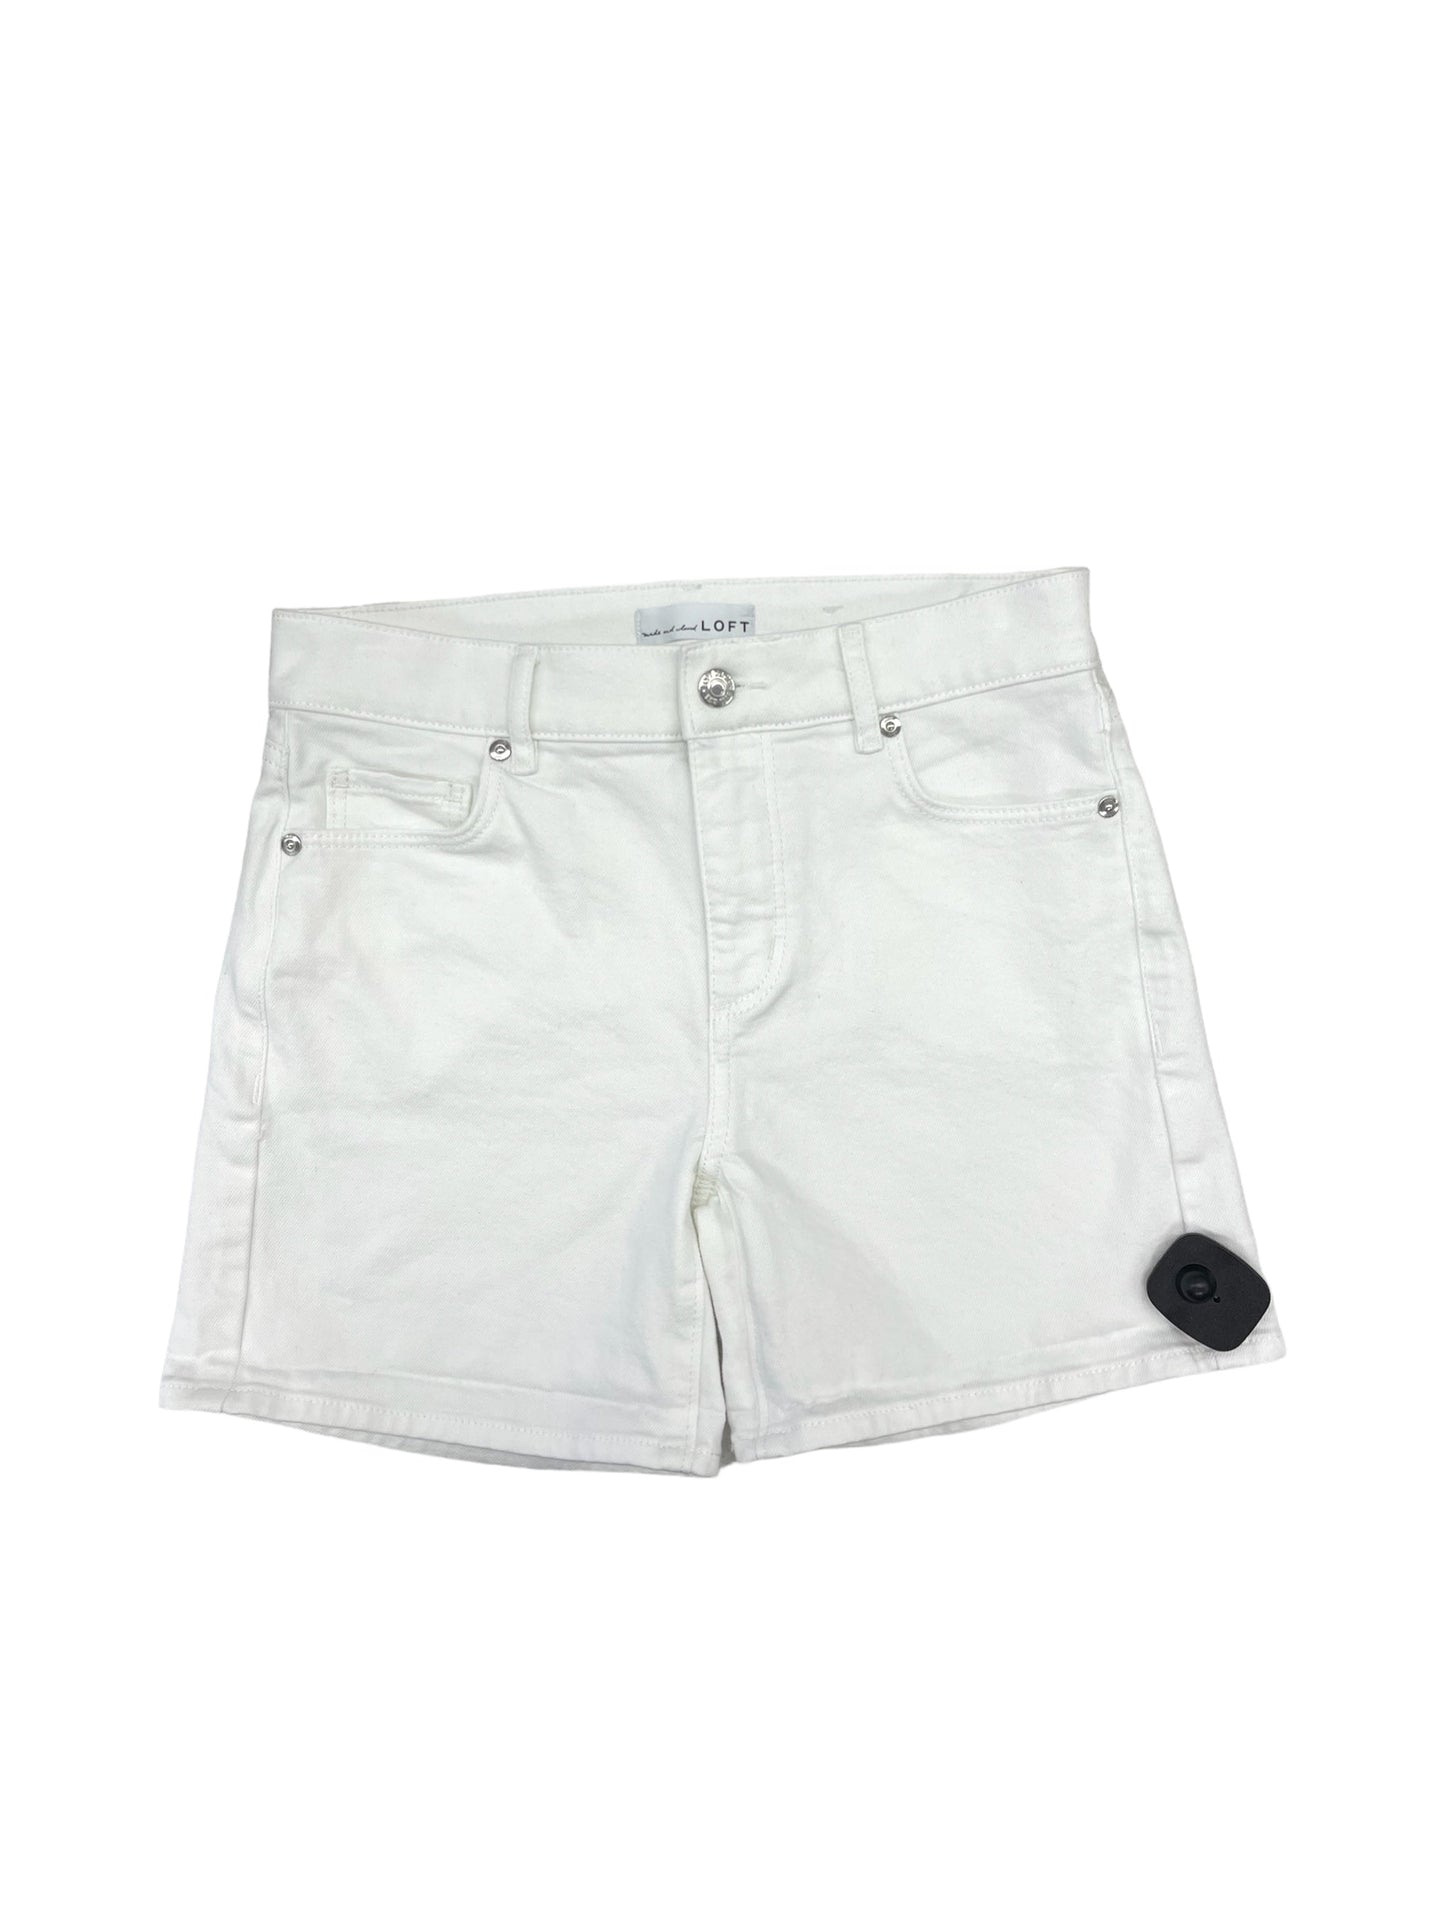 White Shorts Loft, Size 00